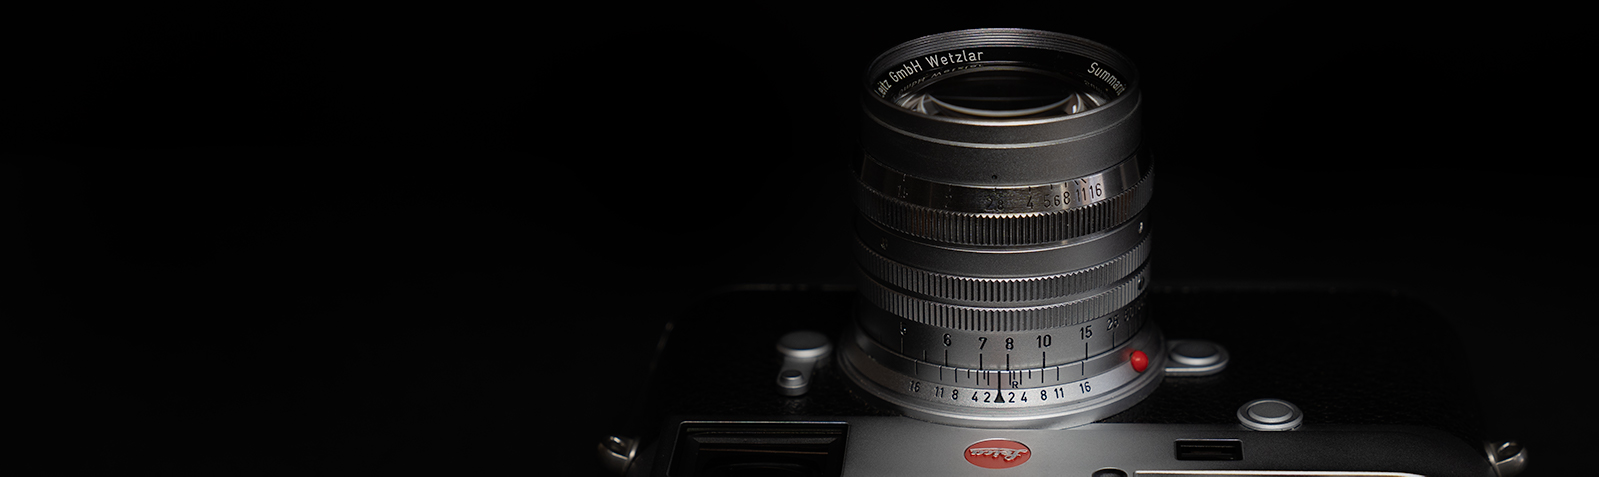 Leica Summarit 50mm f/1.5 review